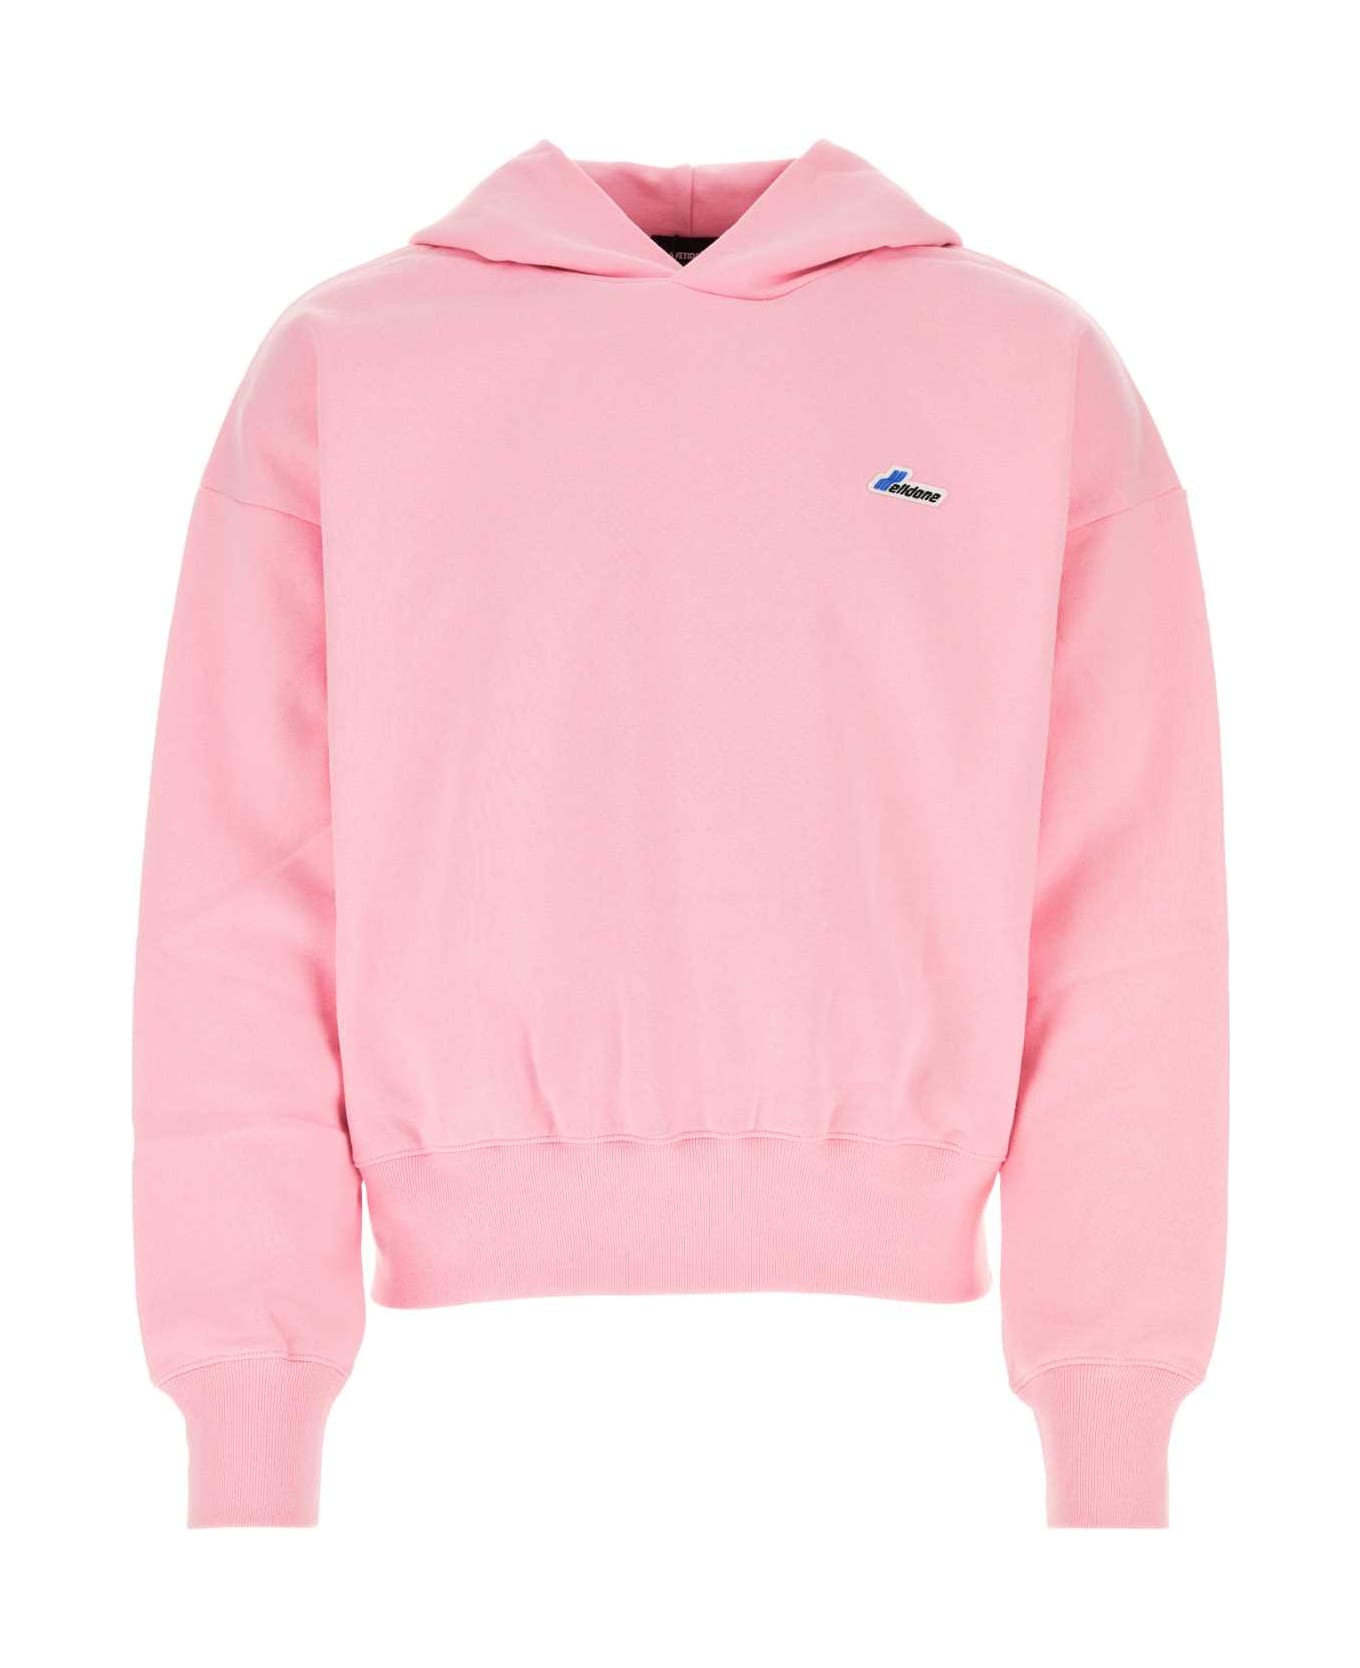 WE11 DONE Pink Cotton Sweatshirt - PINK